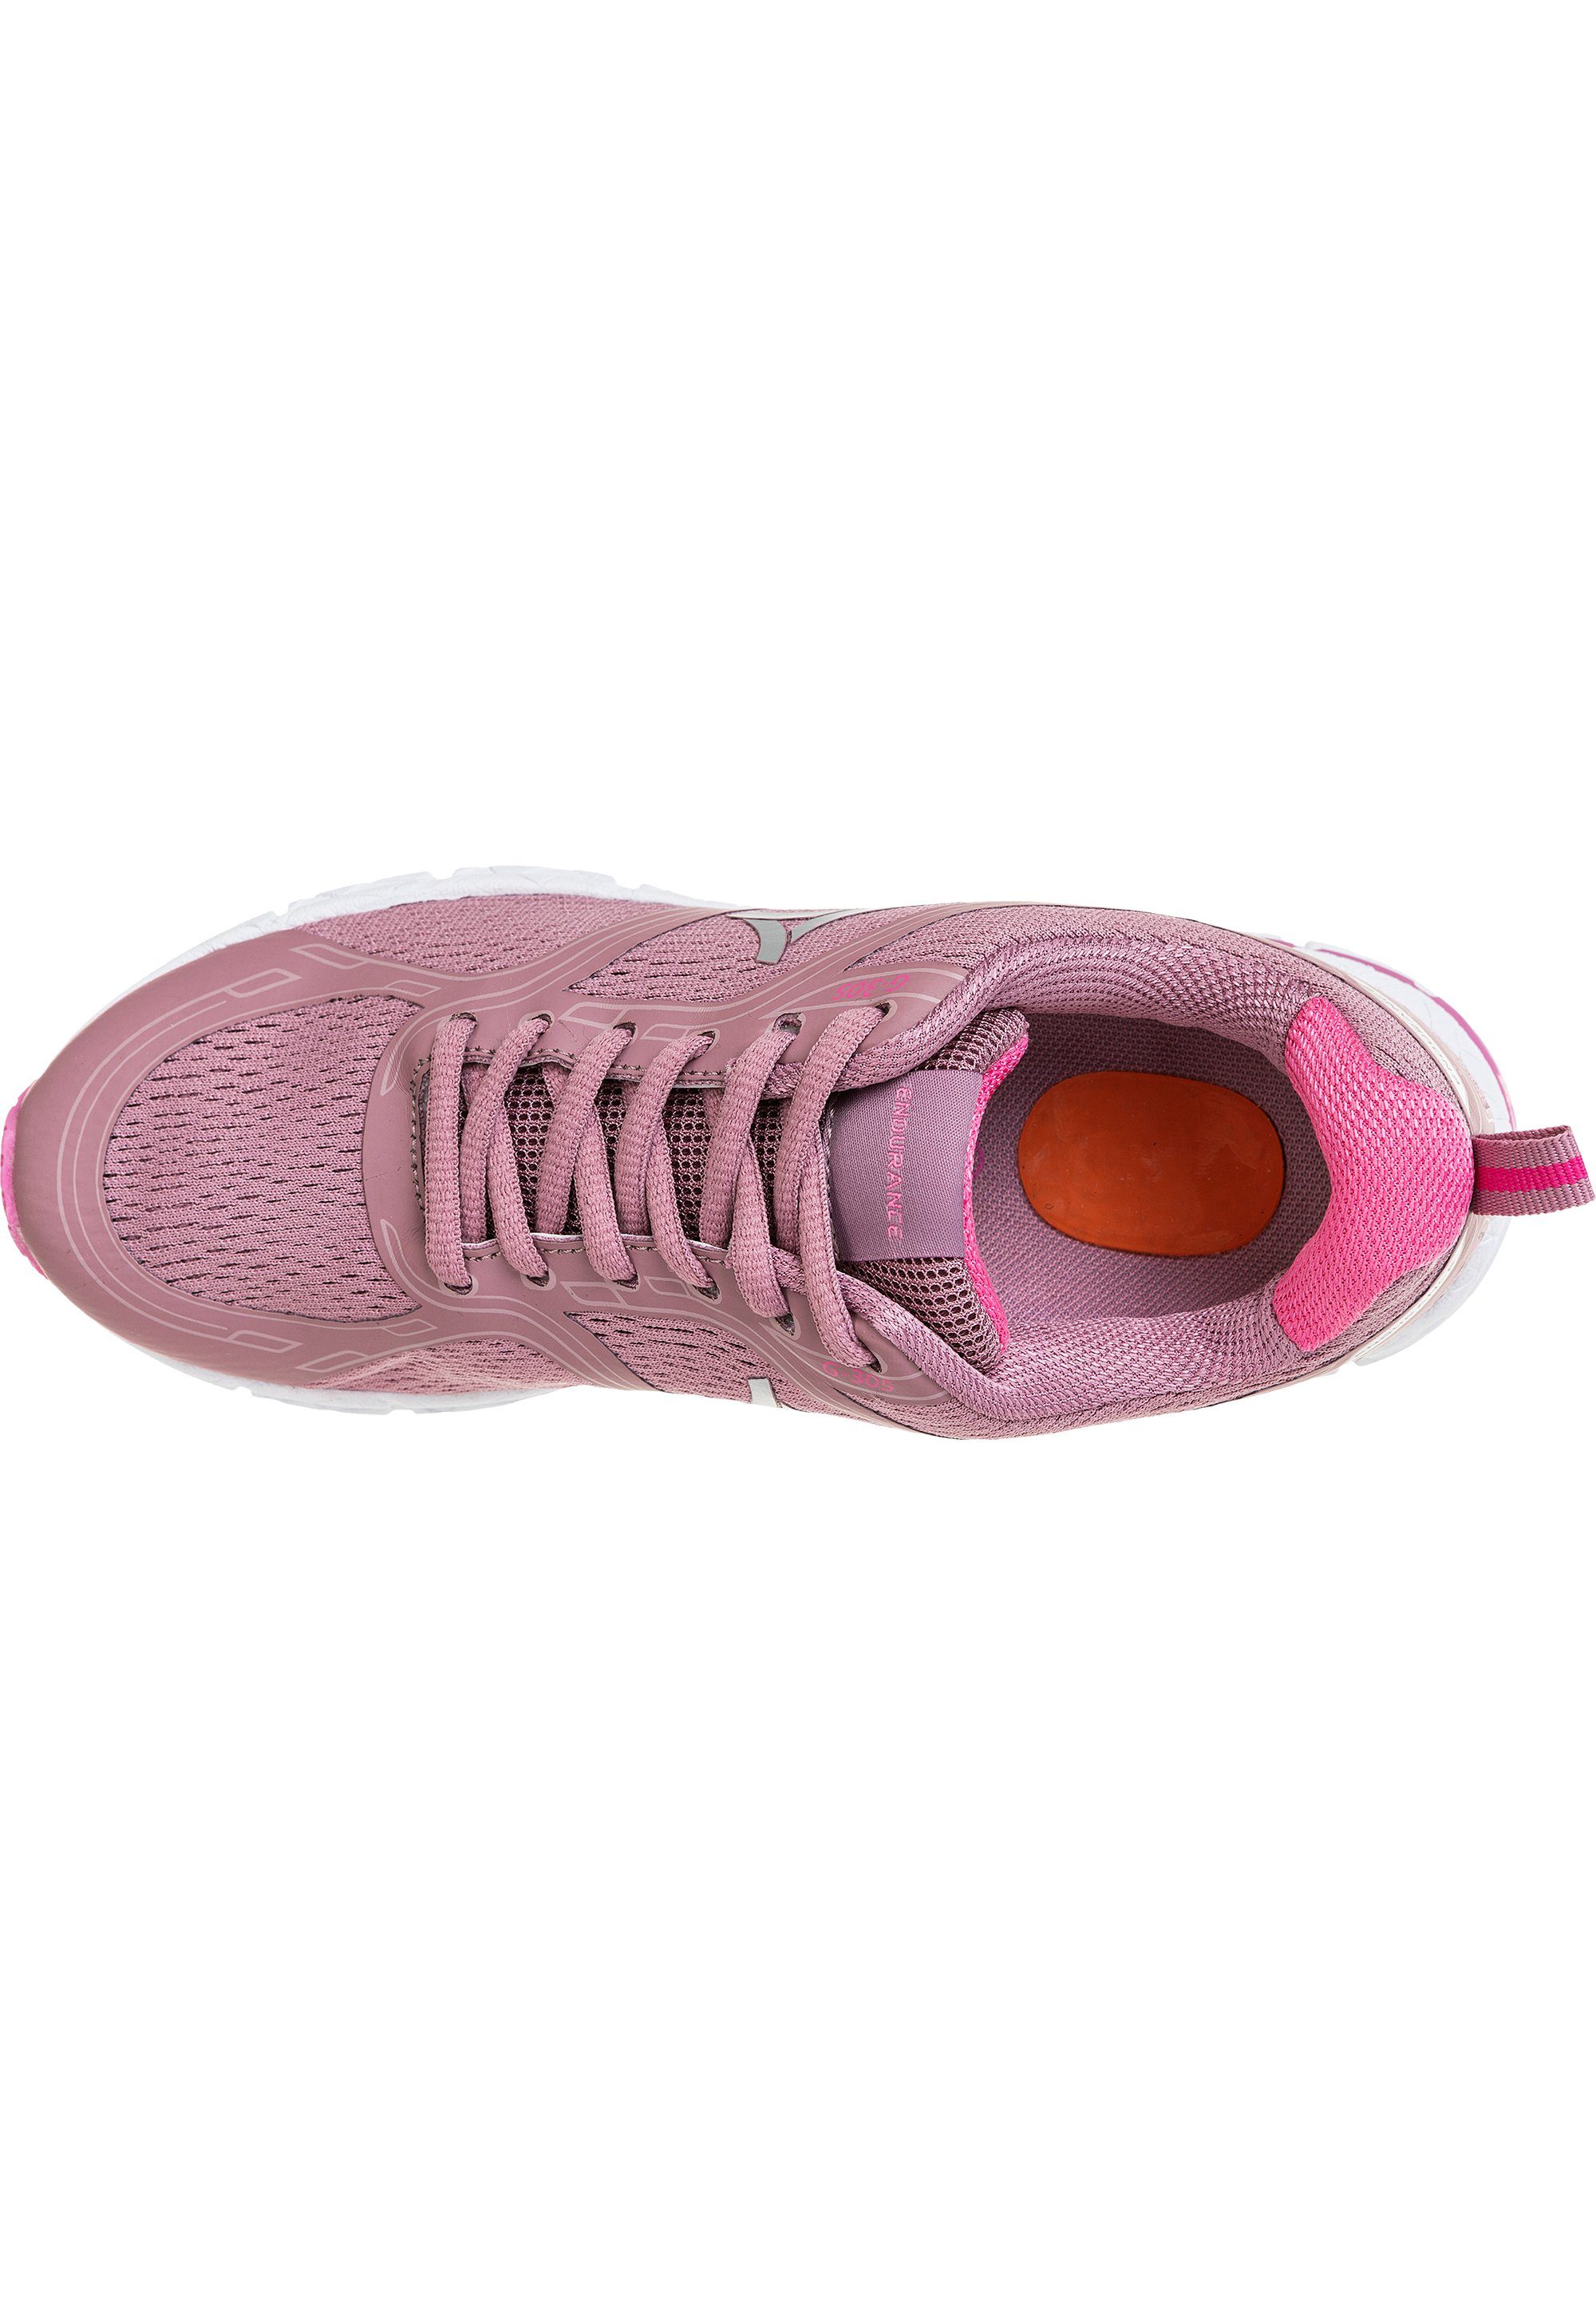 ENDURANCE Sevie Sneaker Mesh-Material rosa atmungsaktivem mit